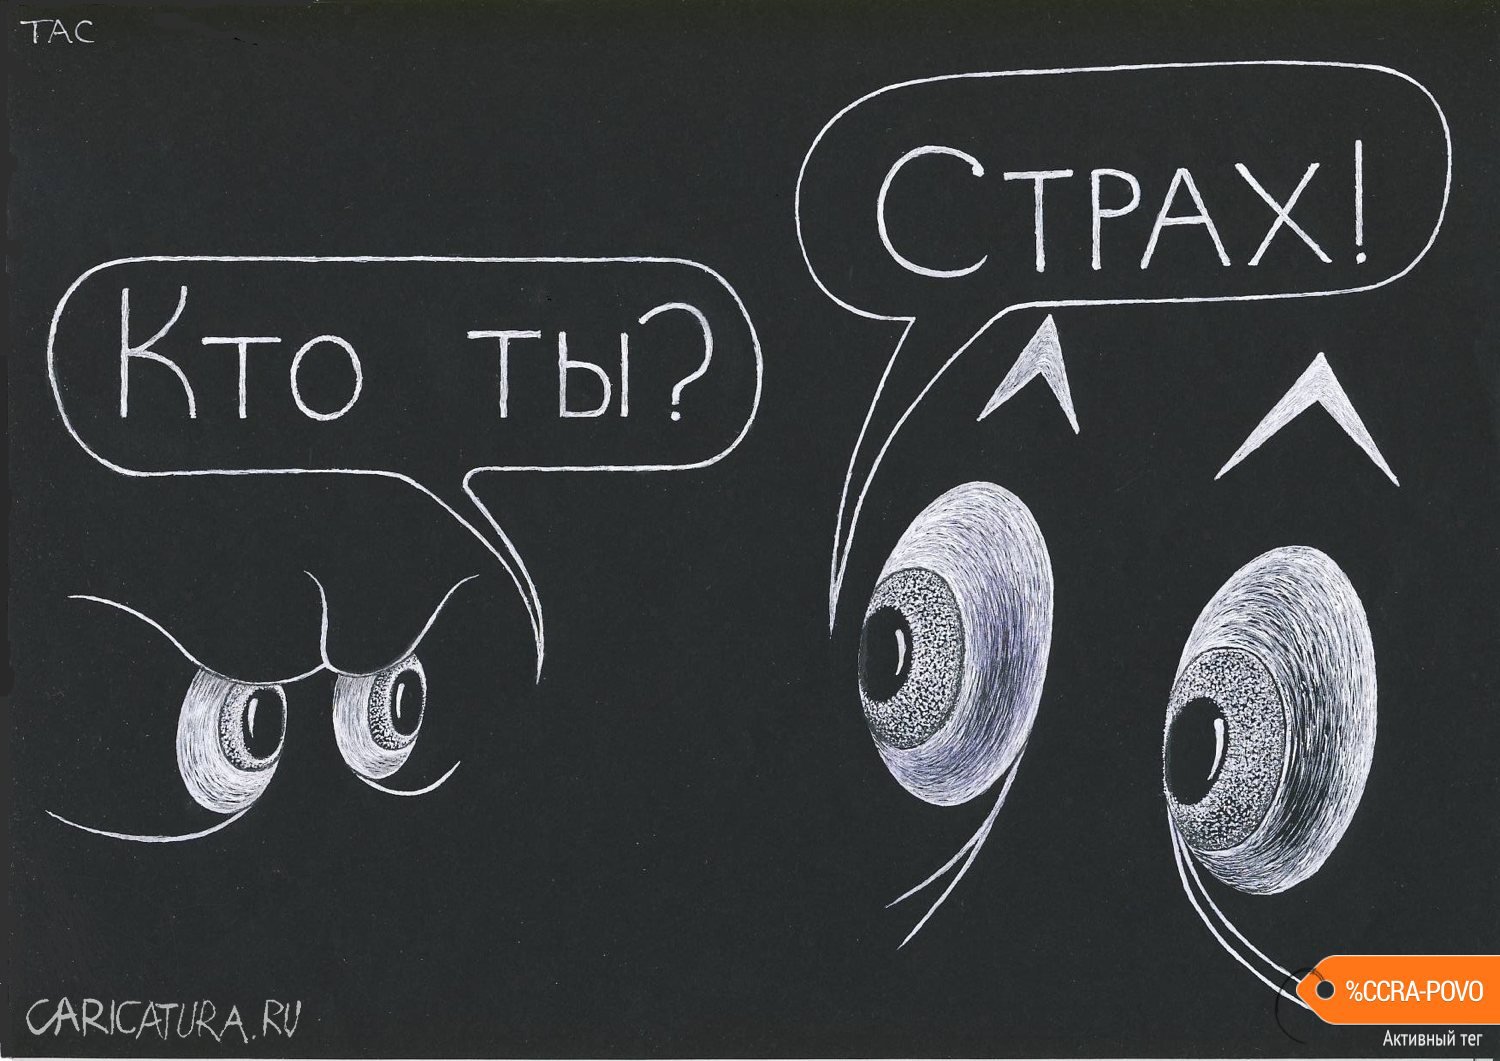 Карикатура "У страха глаза велики", Александр Троицкий